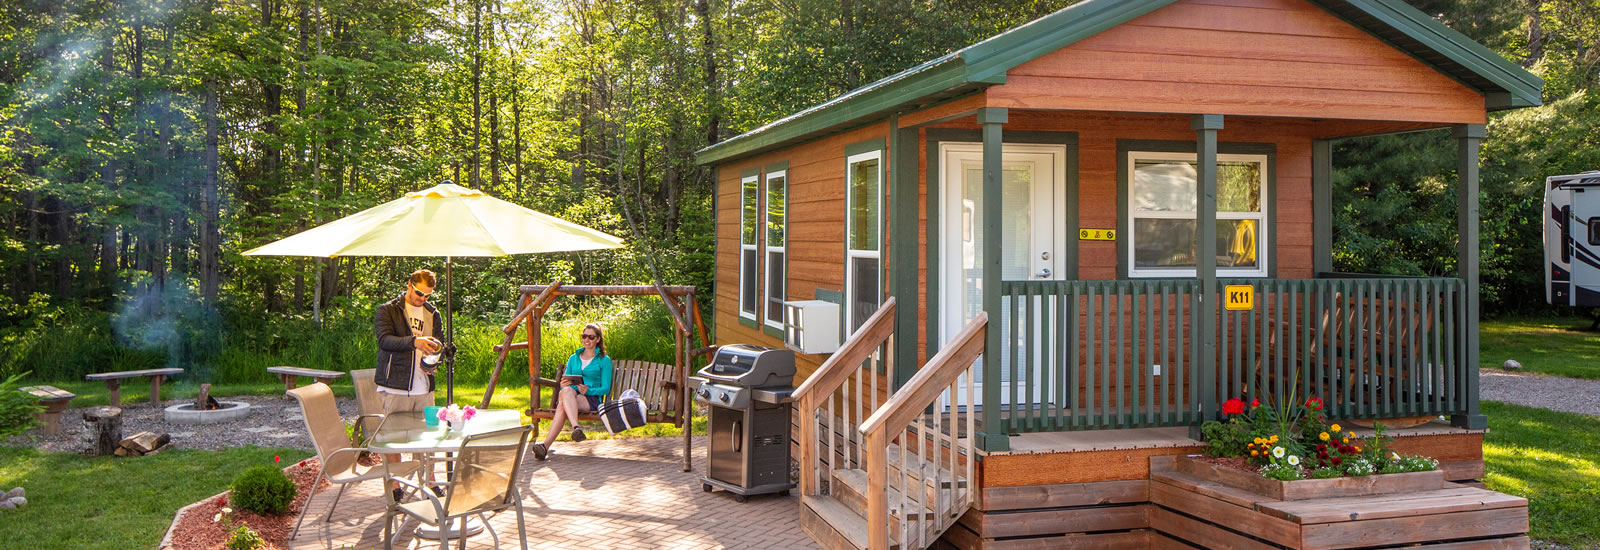 Cabin Camping   KOA Cabin Rentals   Deluxe & Camping Cabins